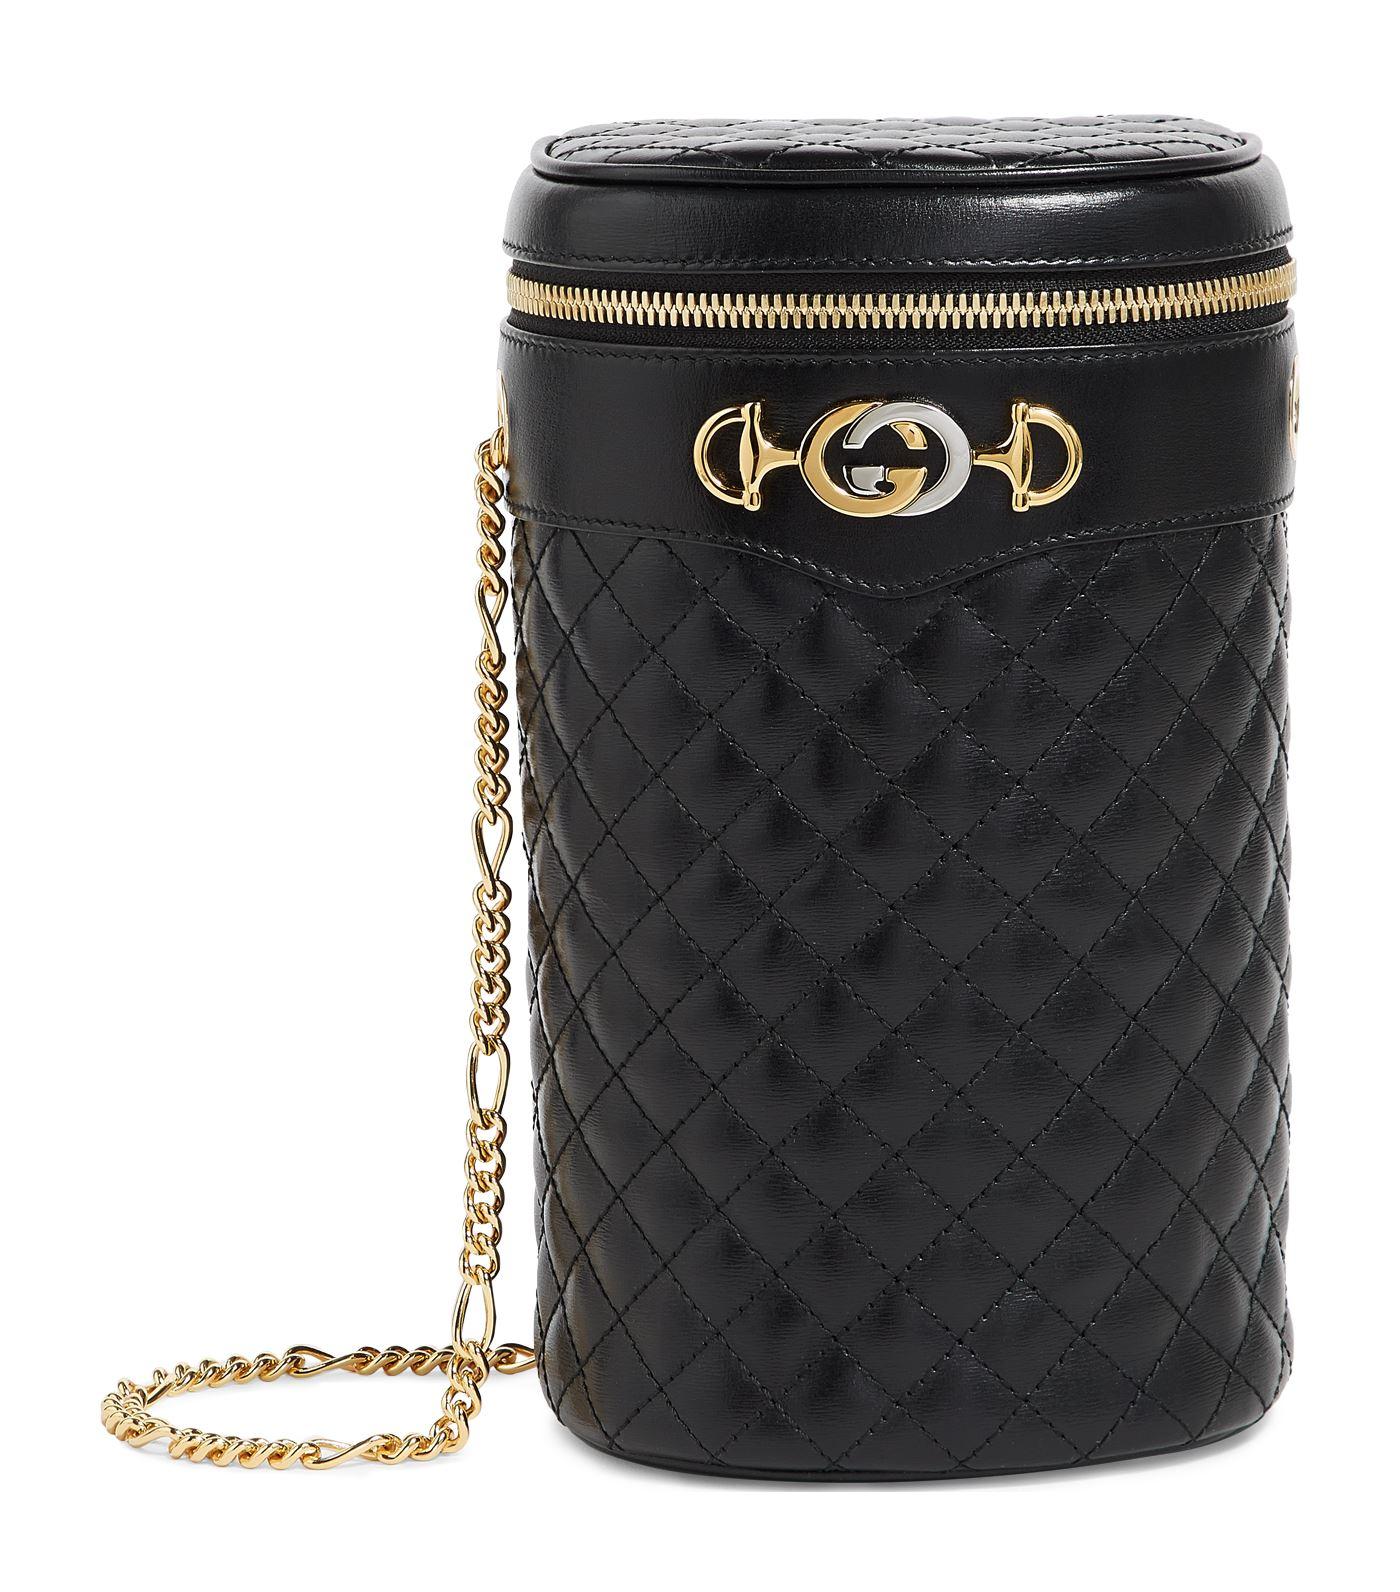 Gucci Leather Trapuntata Belt Bag in Black - Lyst